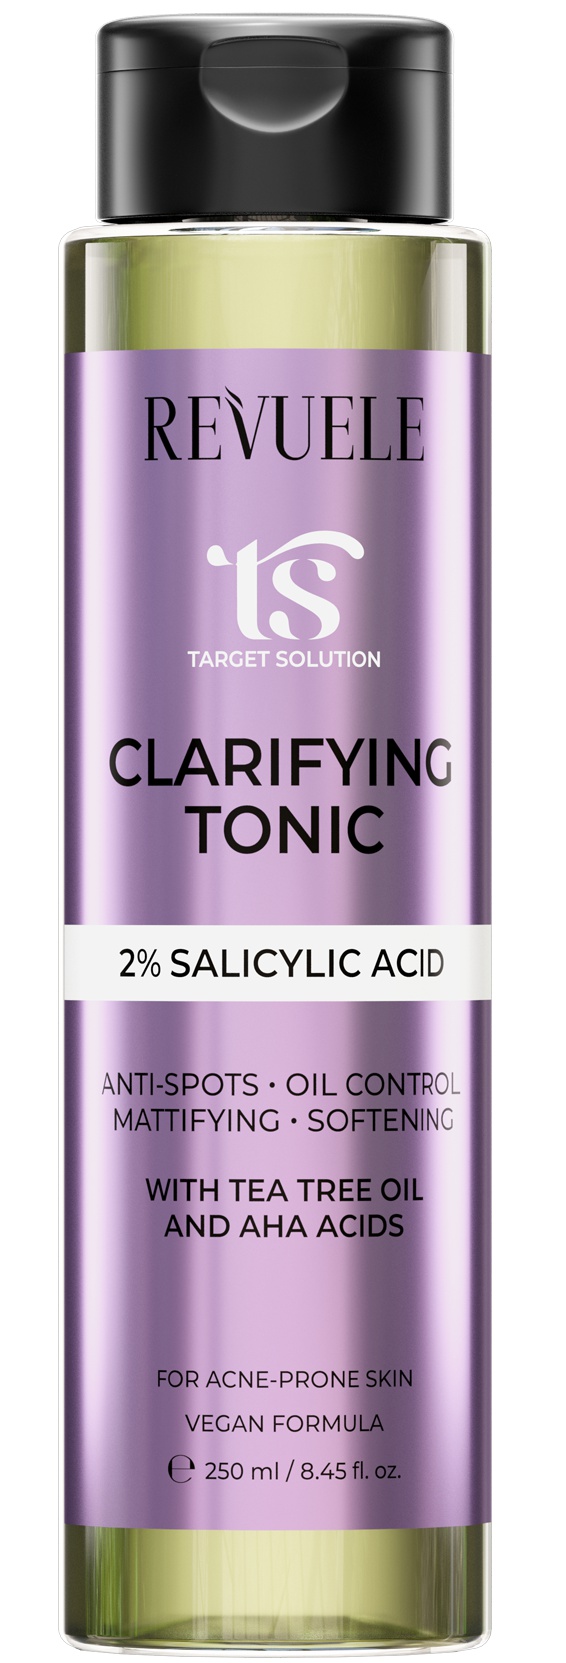 Revuele TS Clarifying Tonic 2% Salicylic Acid